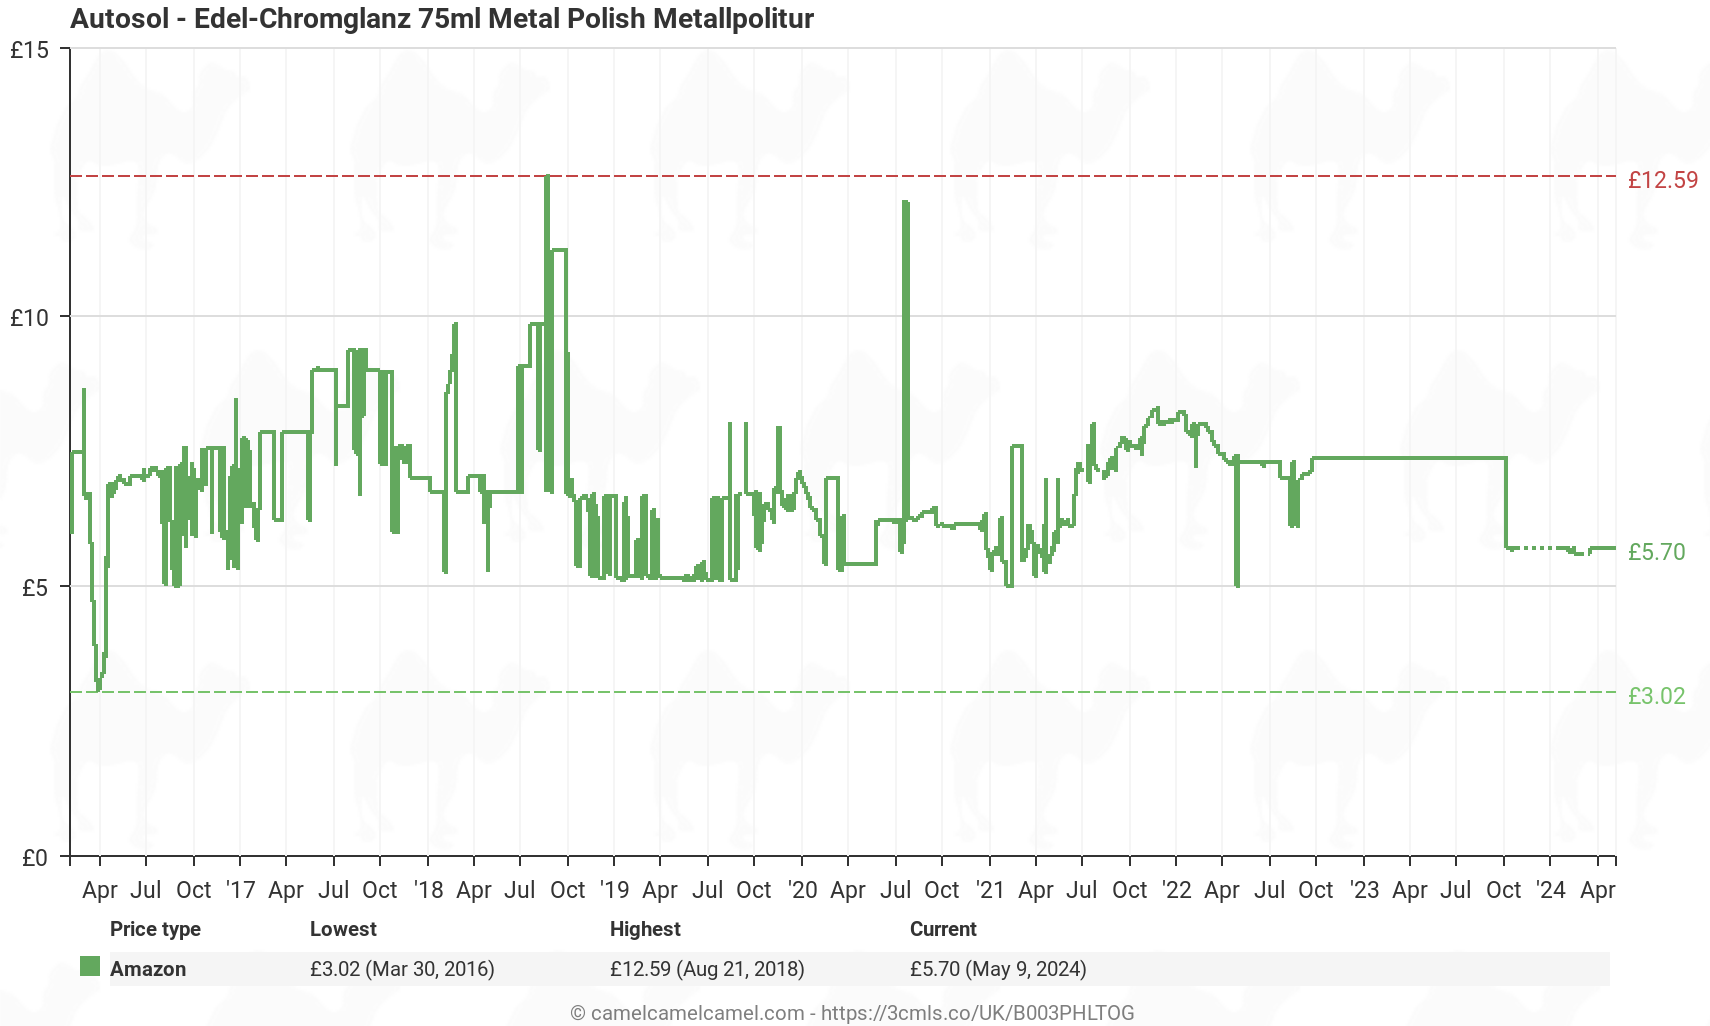 Autosol - Edel-Chromglanz 75ml Metal Polish Metallpolitur - Price History: B003PHLTOG